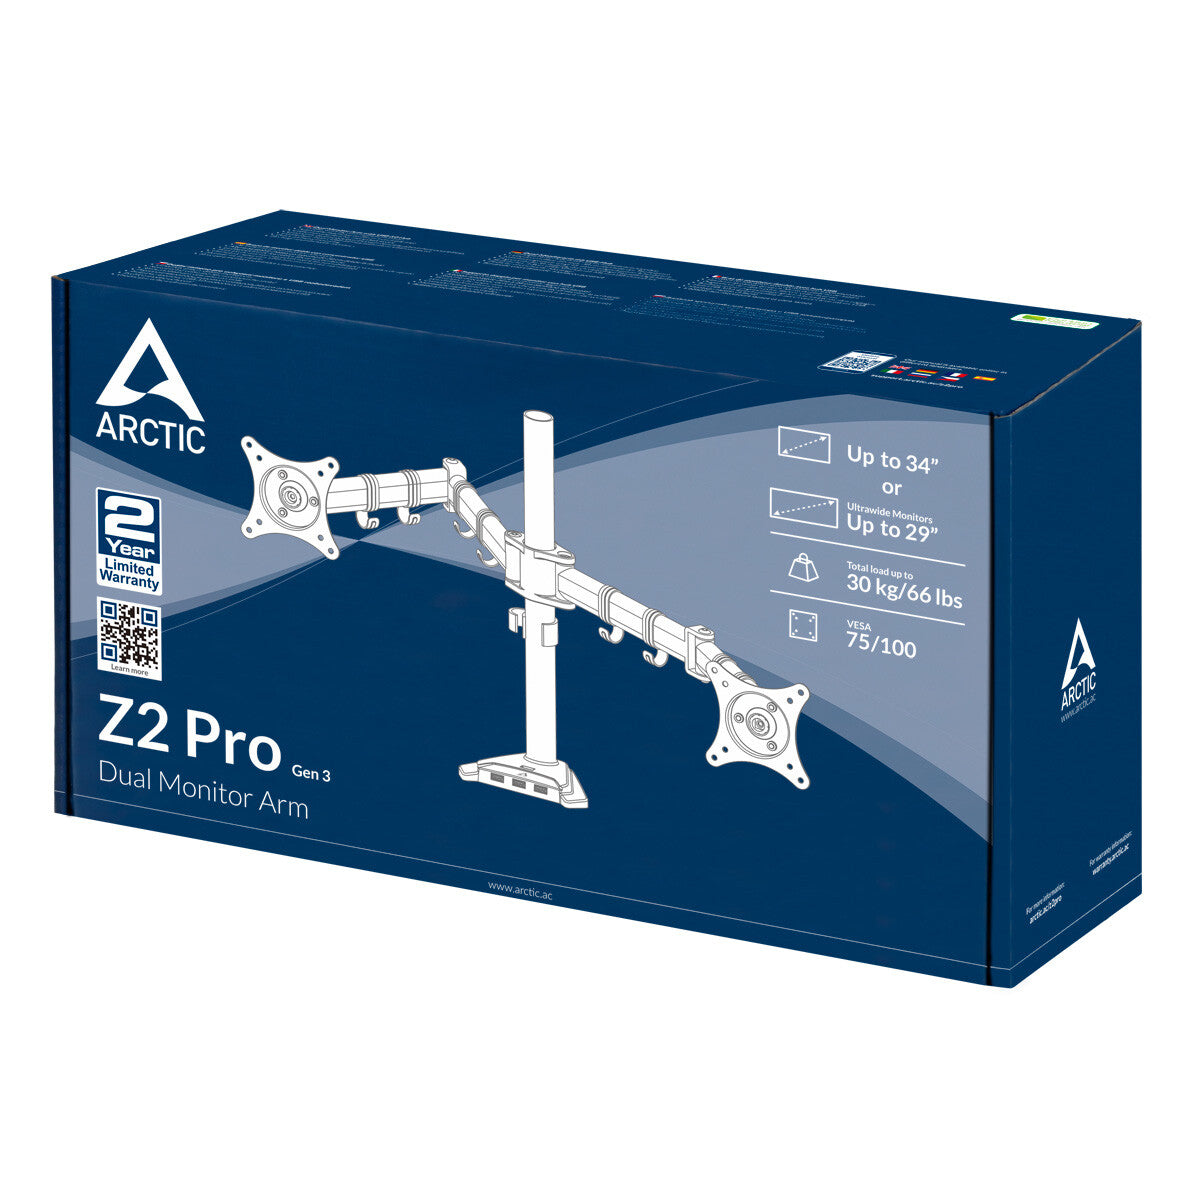 ARCTIC Z2 Pro (Gen 3) - Dual Monitor Arm with USB 3.0 Hub